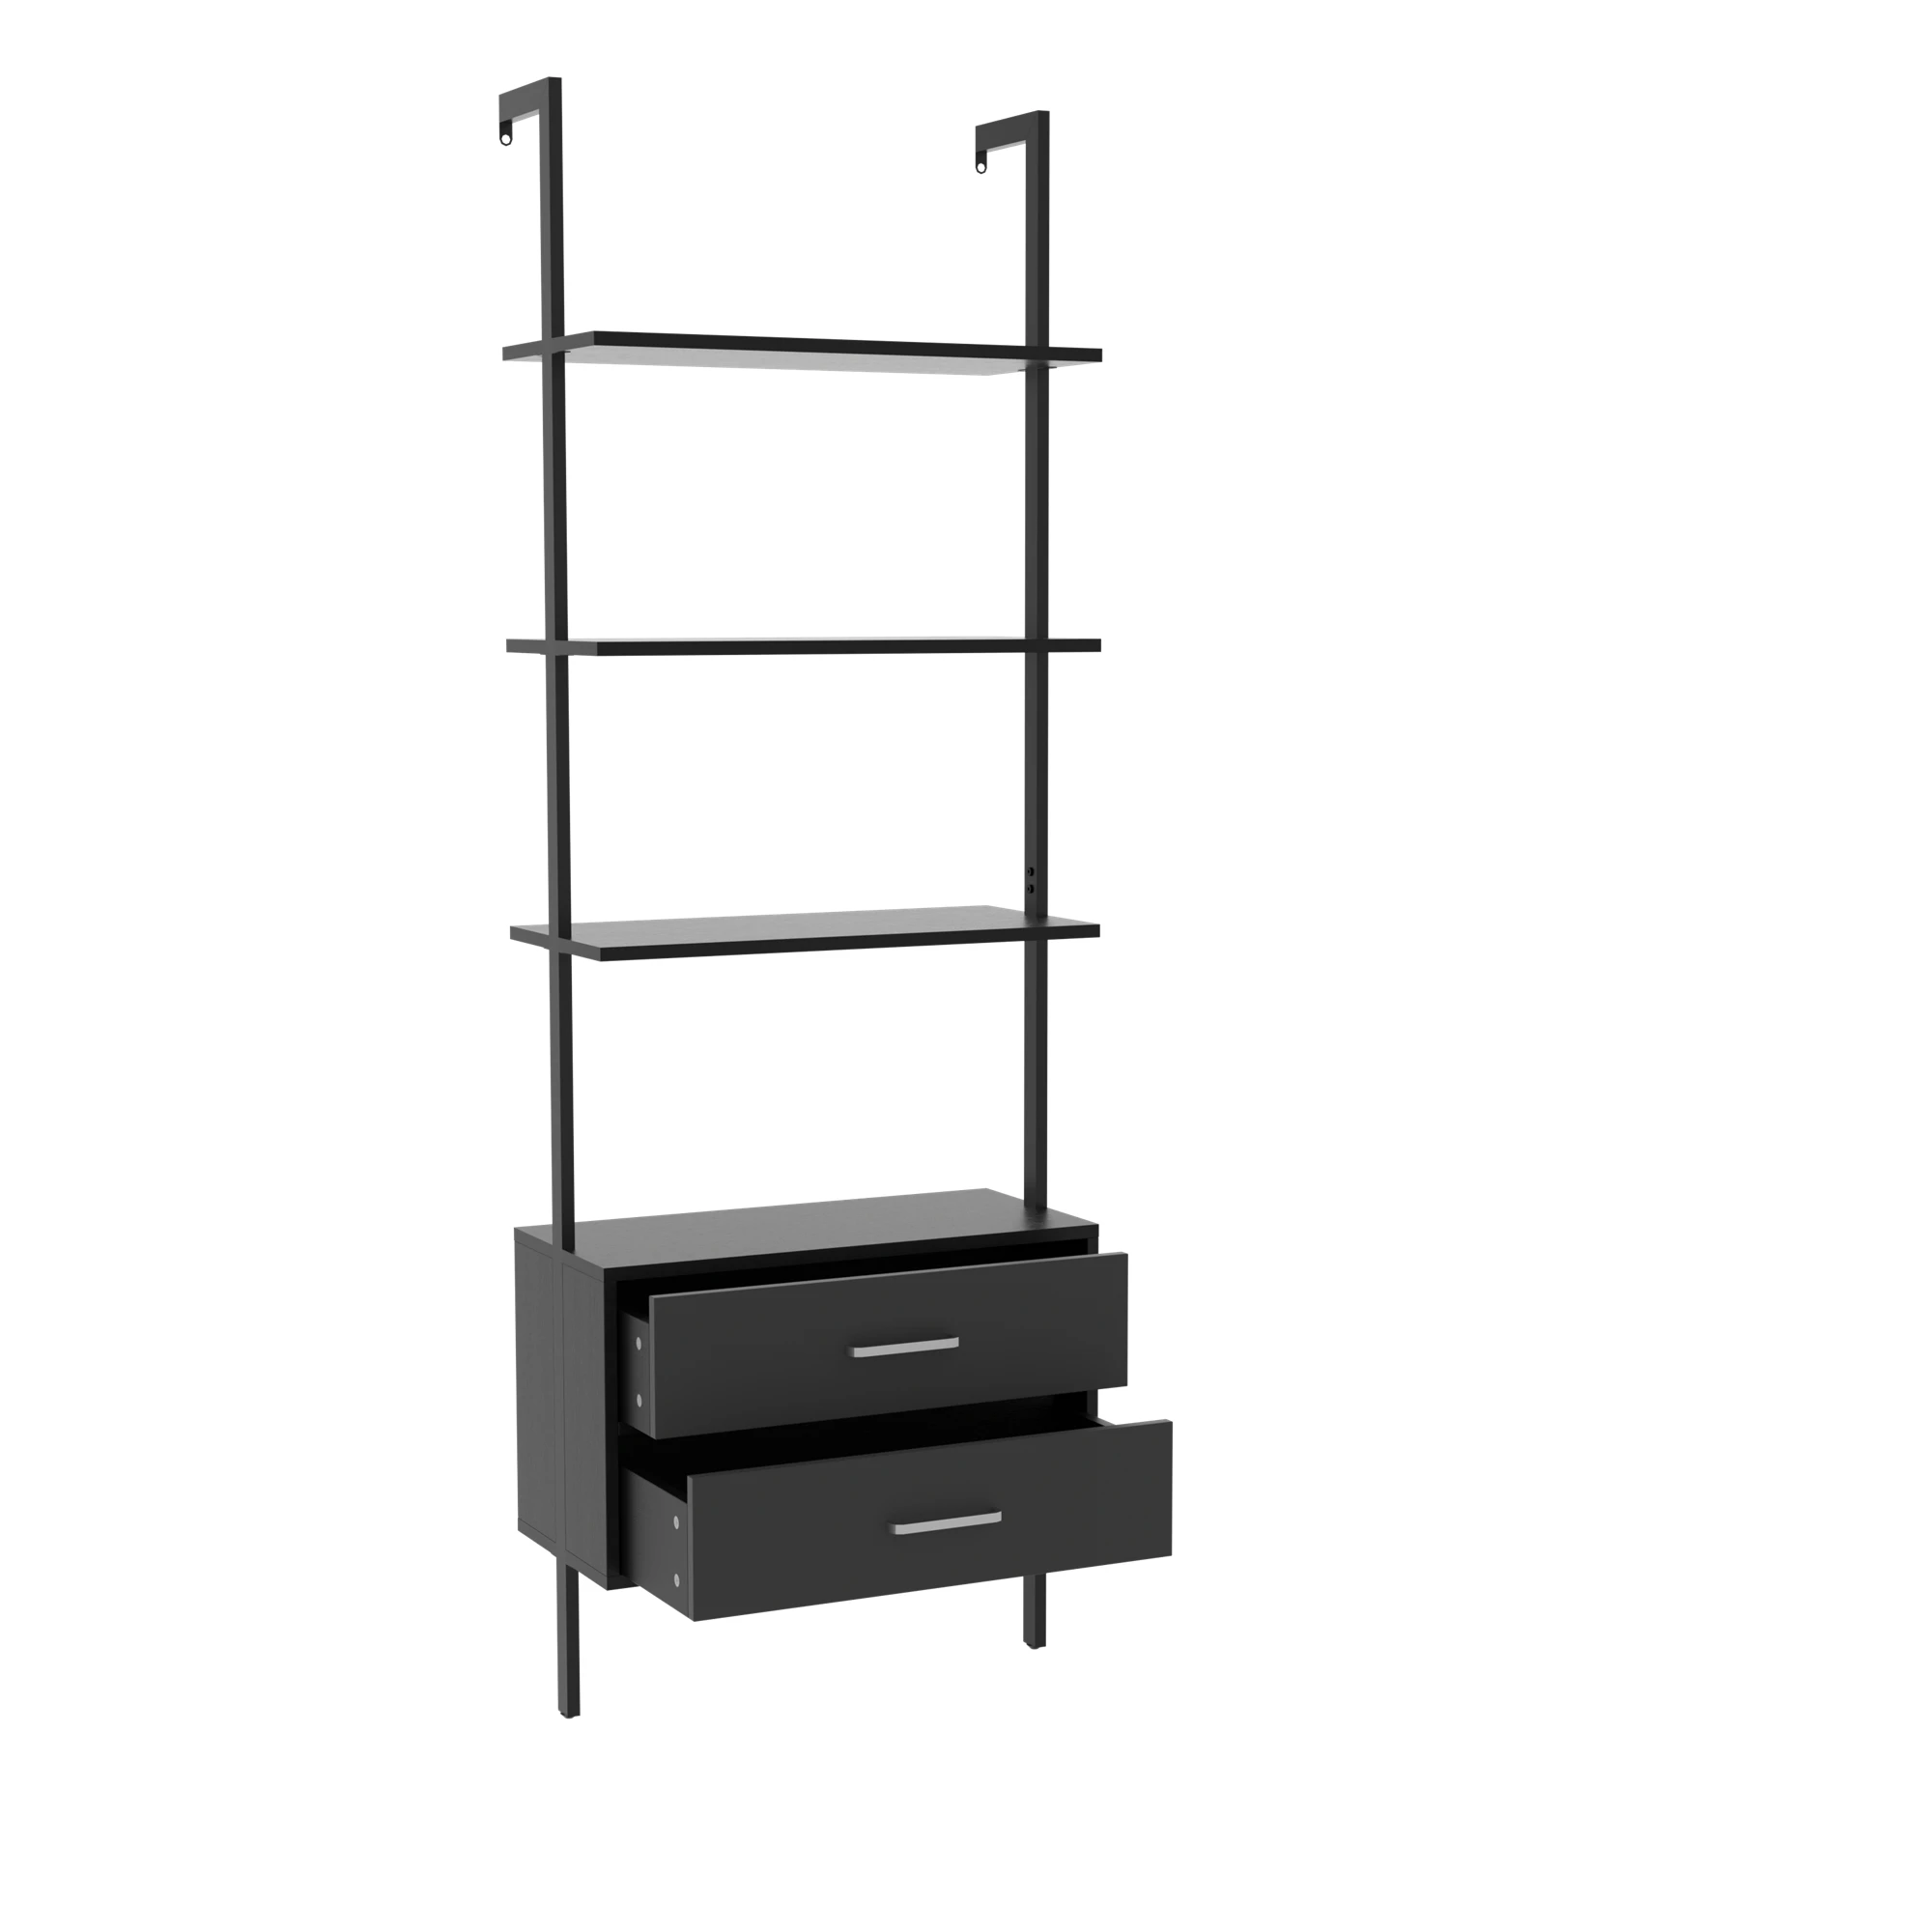 

[Flash Sale]Vertical Open Space Shelf with 2 Drawers Ladder BookCase Modern Storage Rack Shelves Office Bookshelf(Black+Gray)